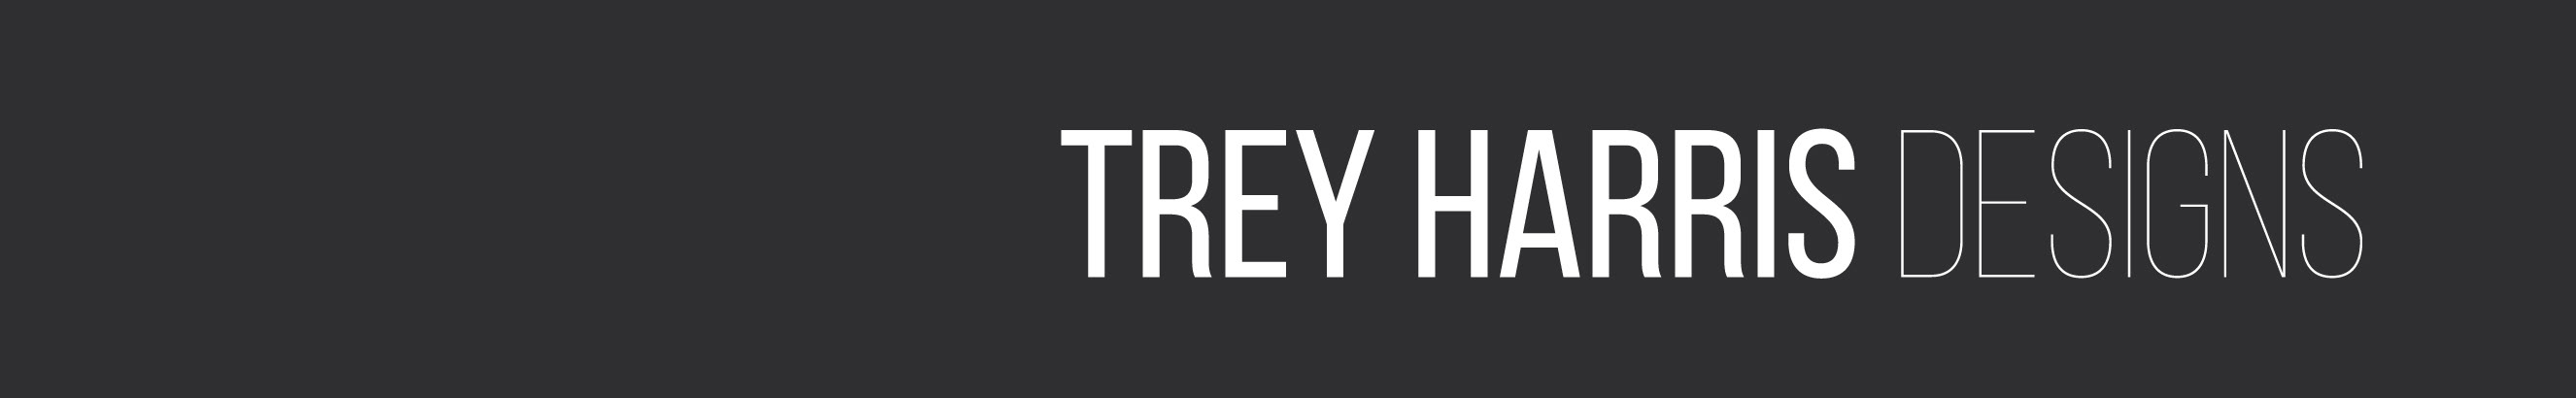 Trey Harris's profile banner